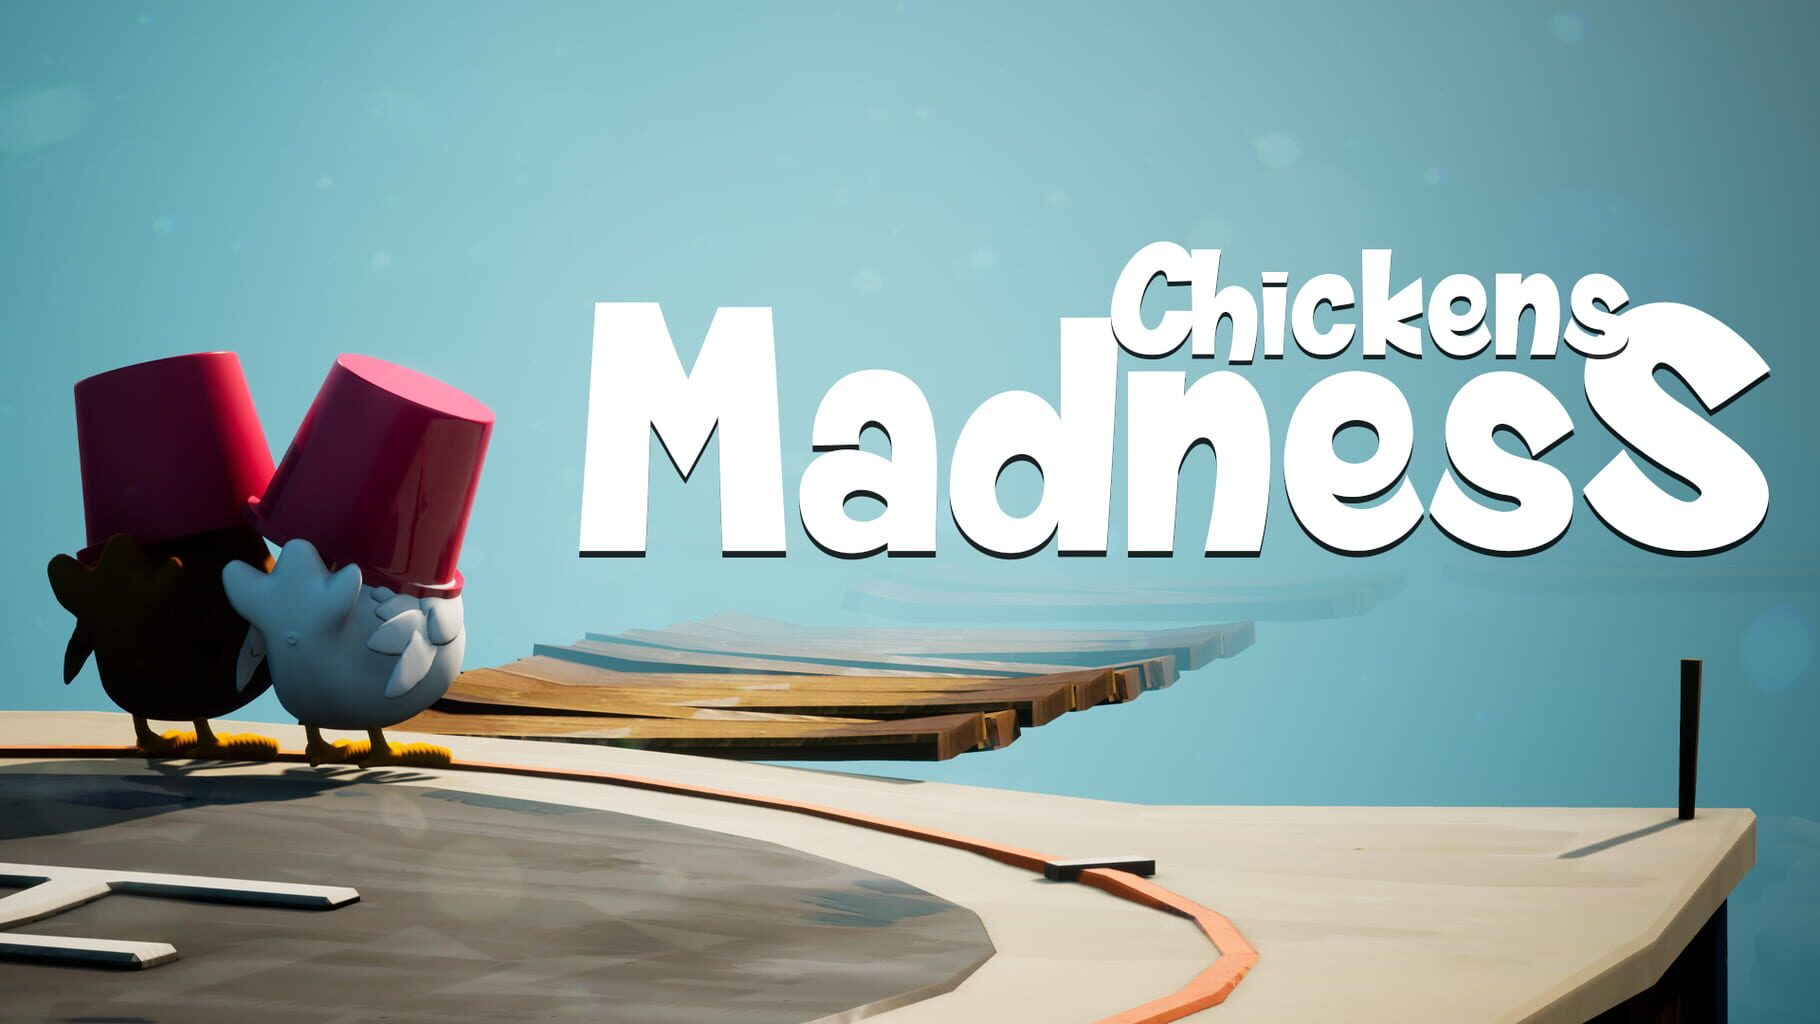 Chickens Madness artwork